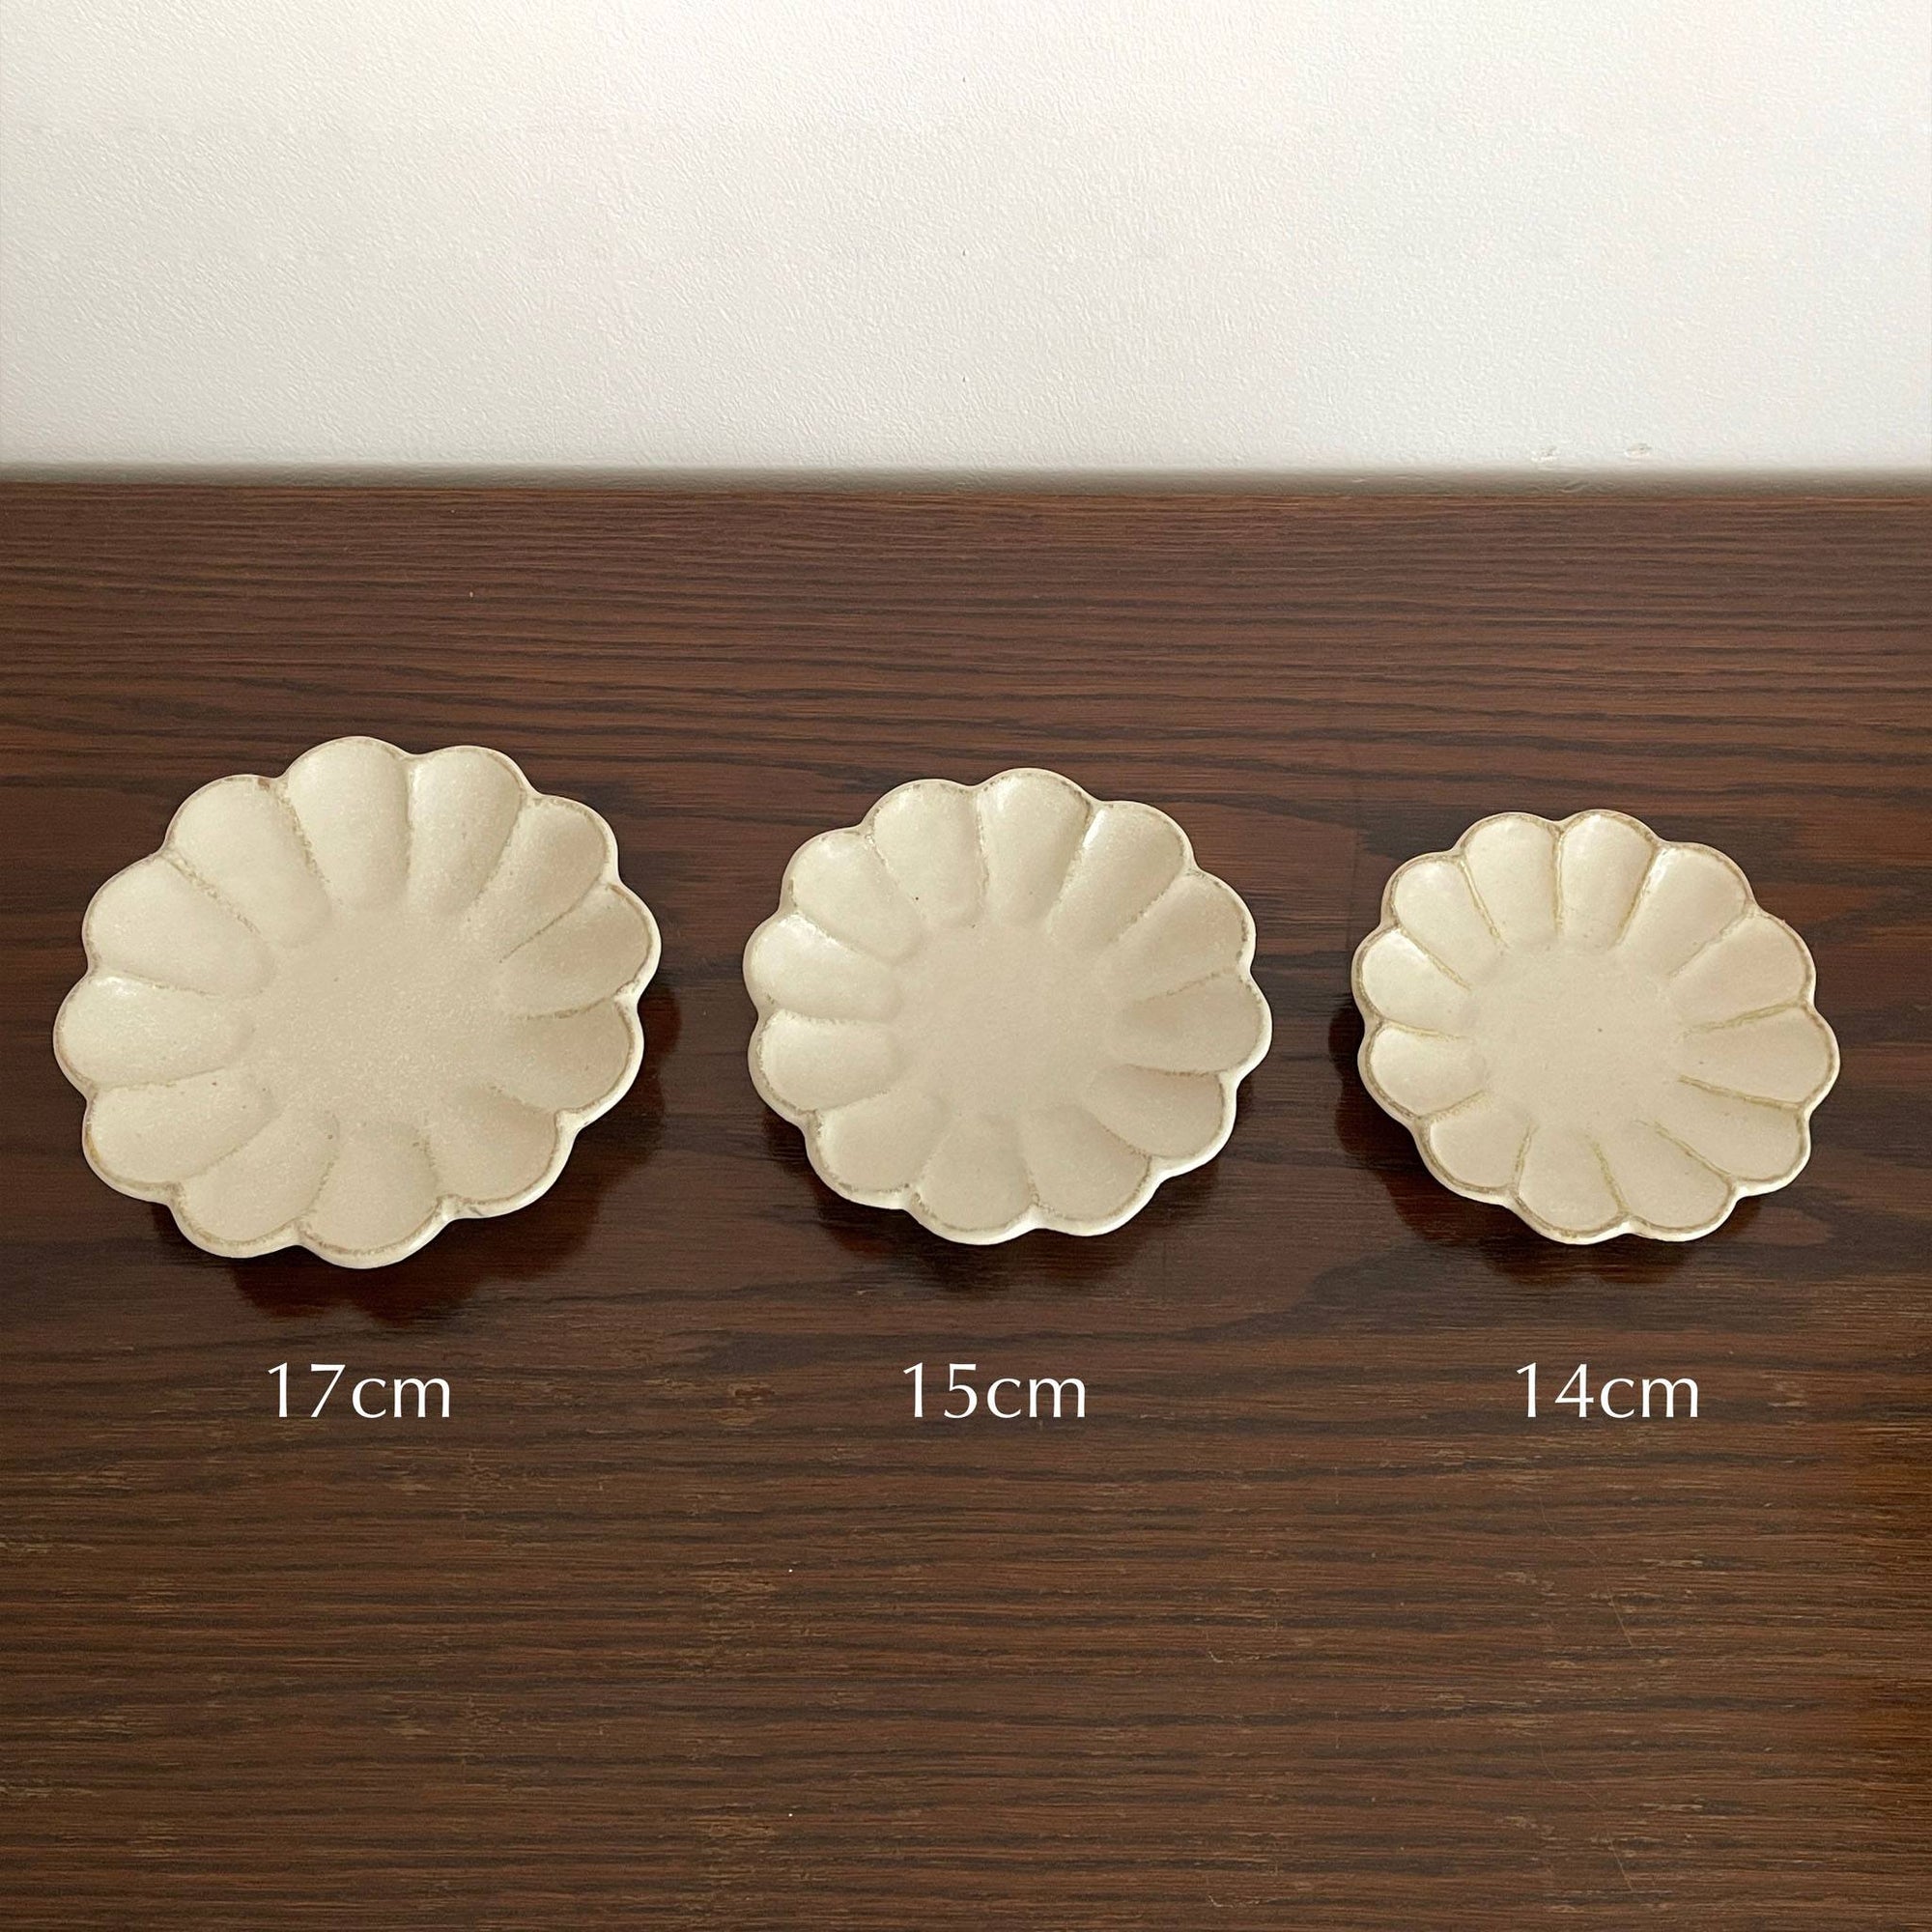 Rinka Plate 15cm - Kaneko Kohyo Porcelain Plate LoveÉcru